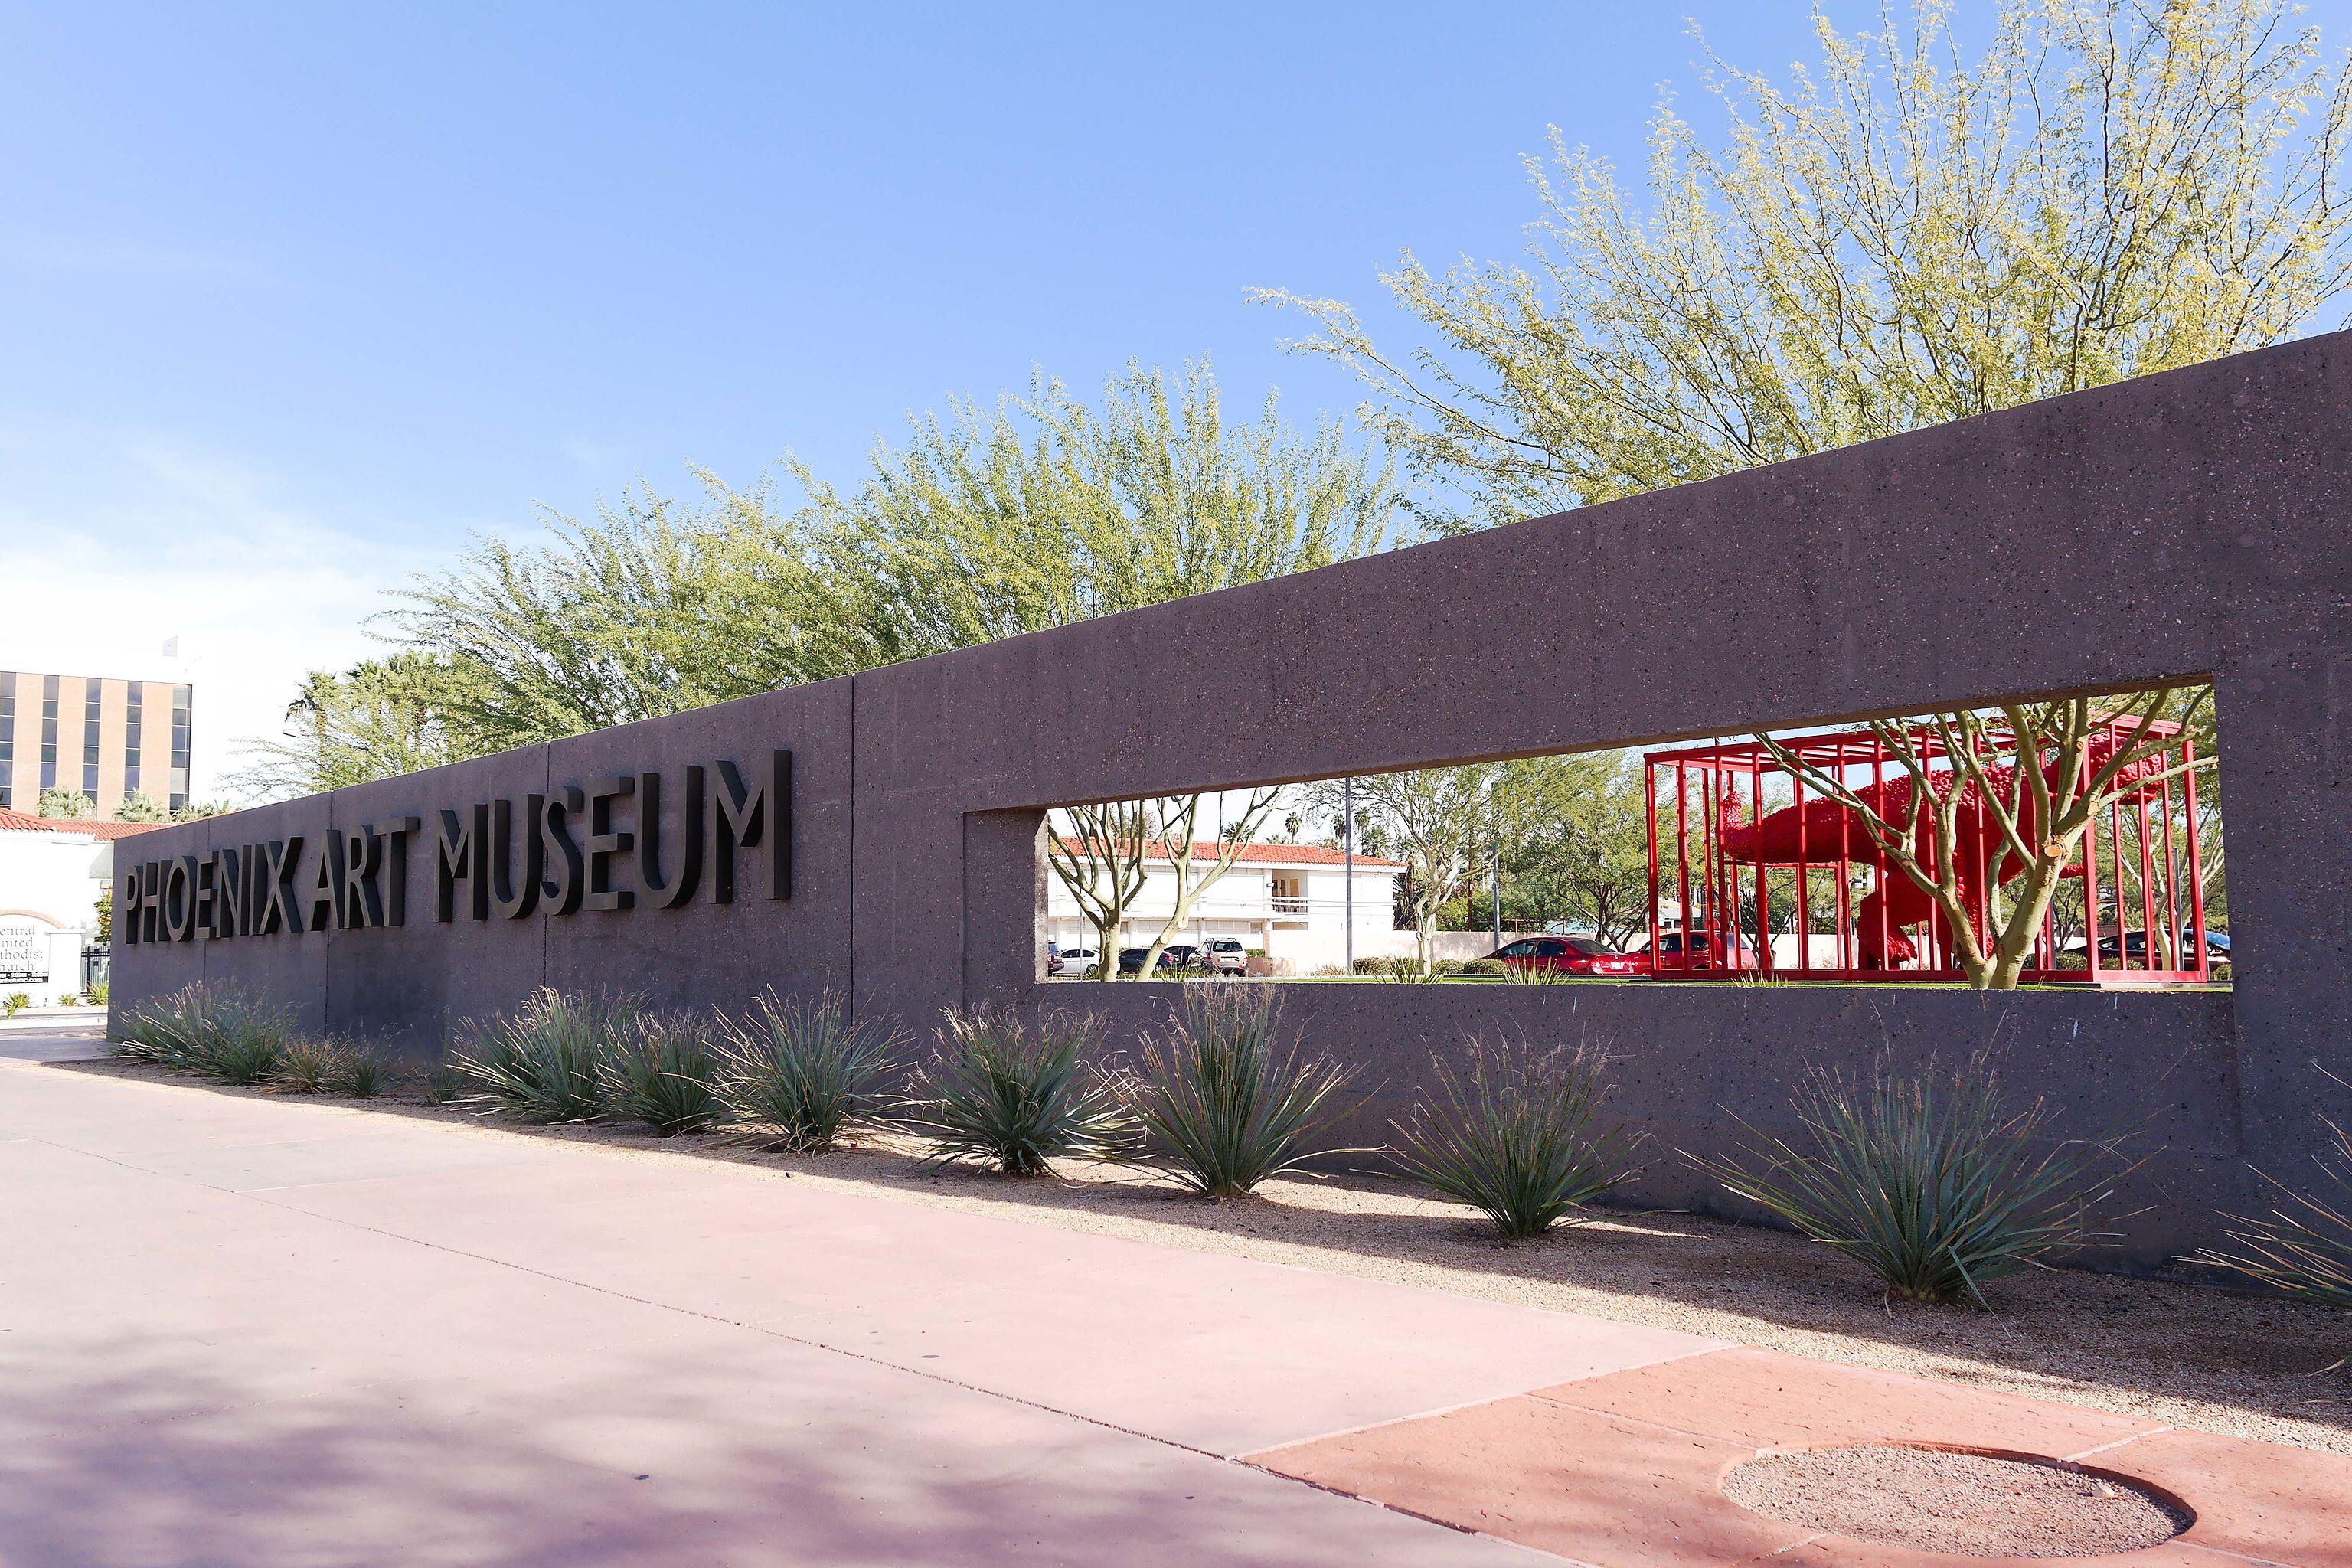 A view of the Phoenix Art Museum in Phoenix, Arizona